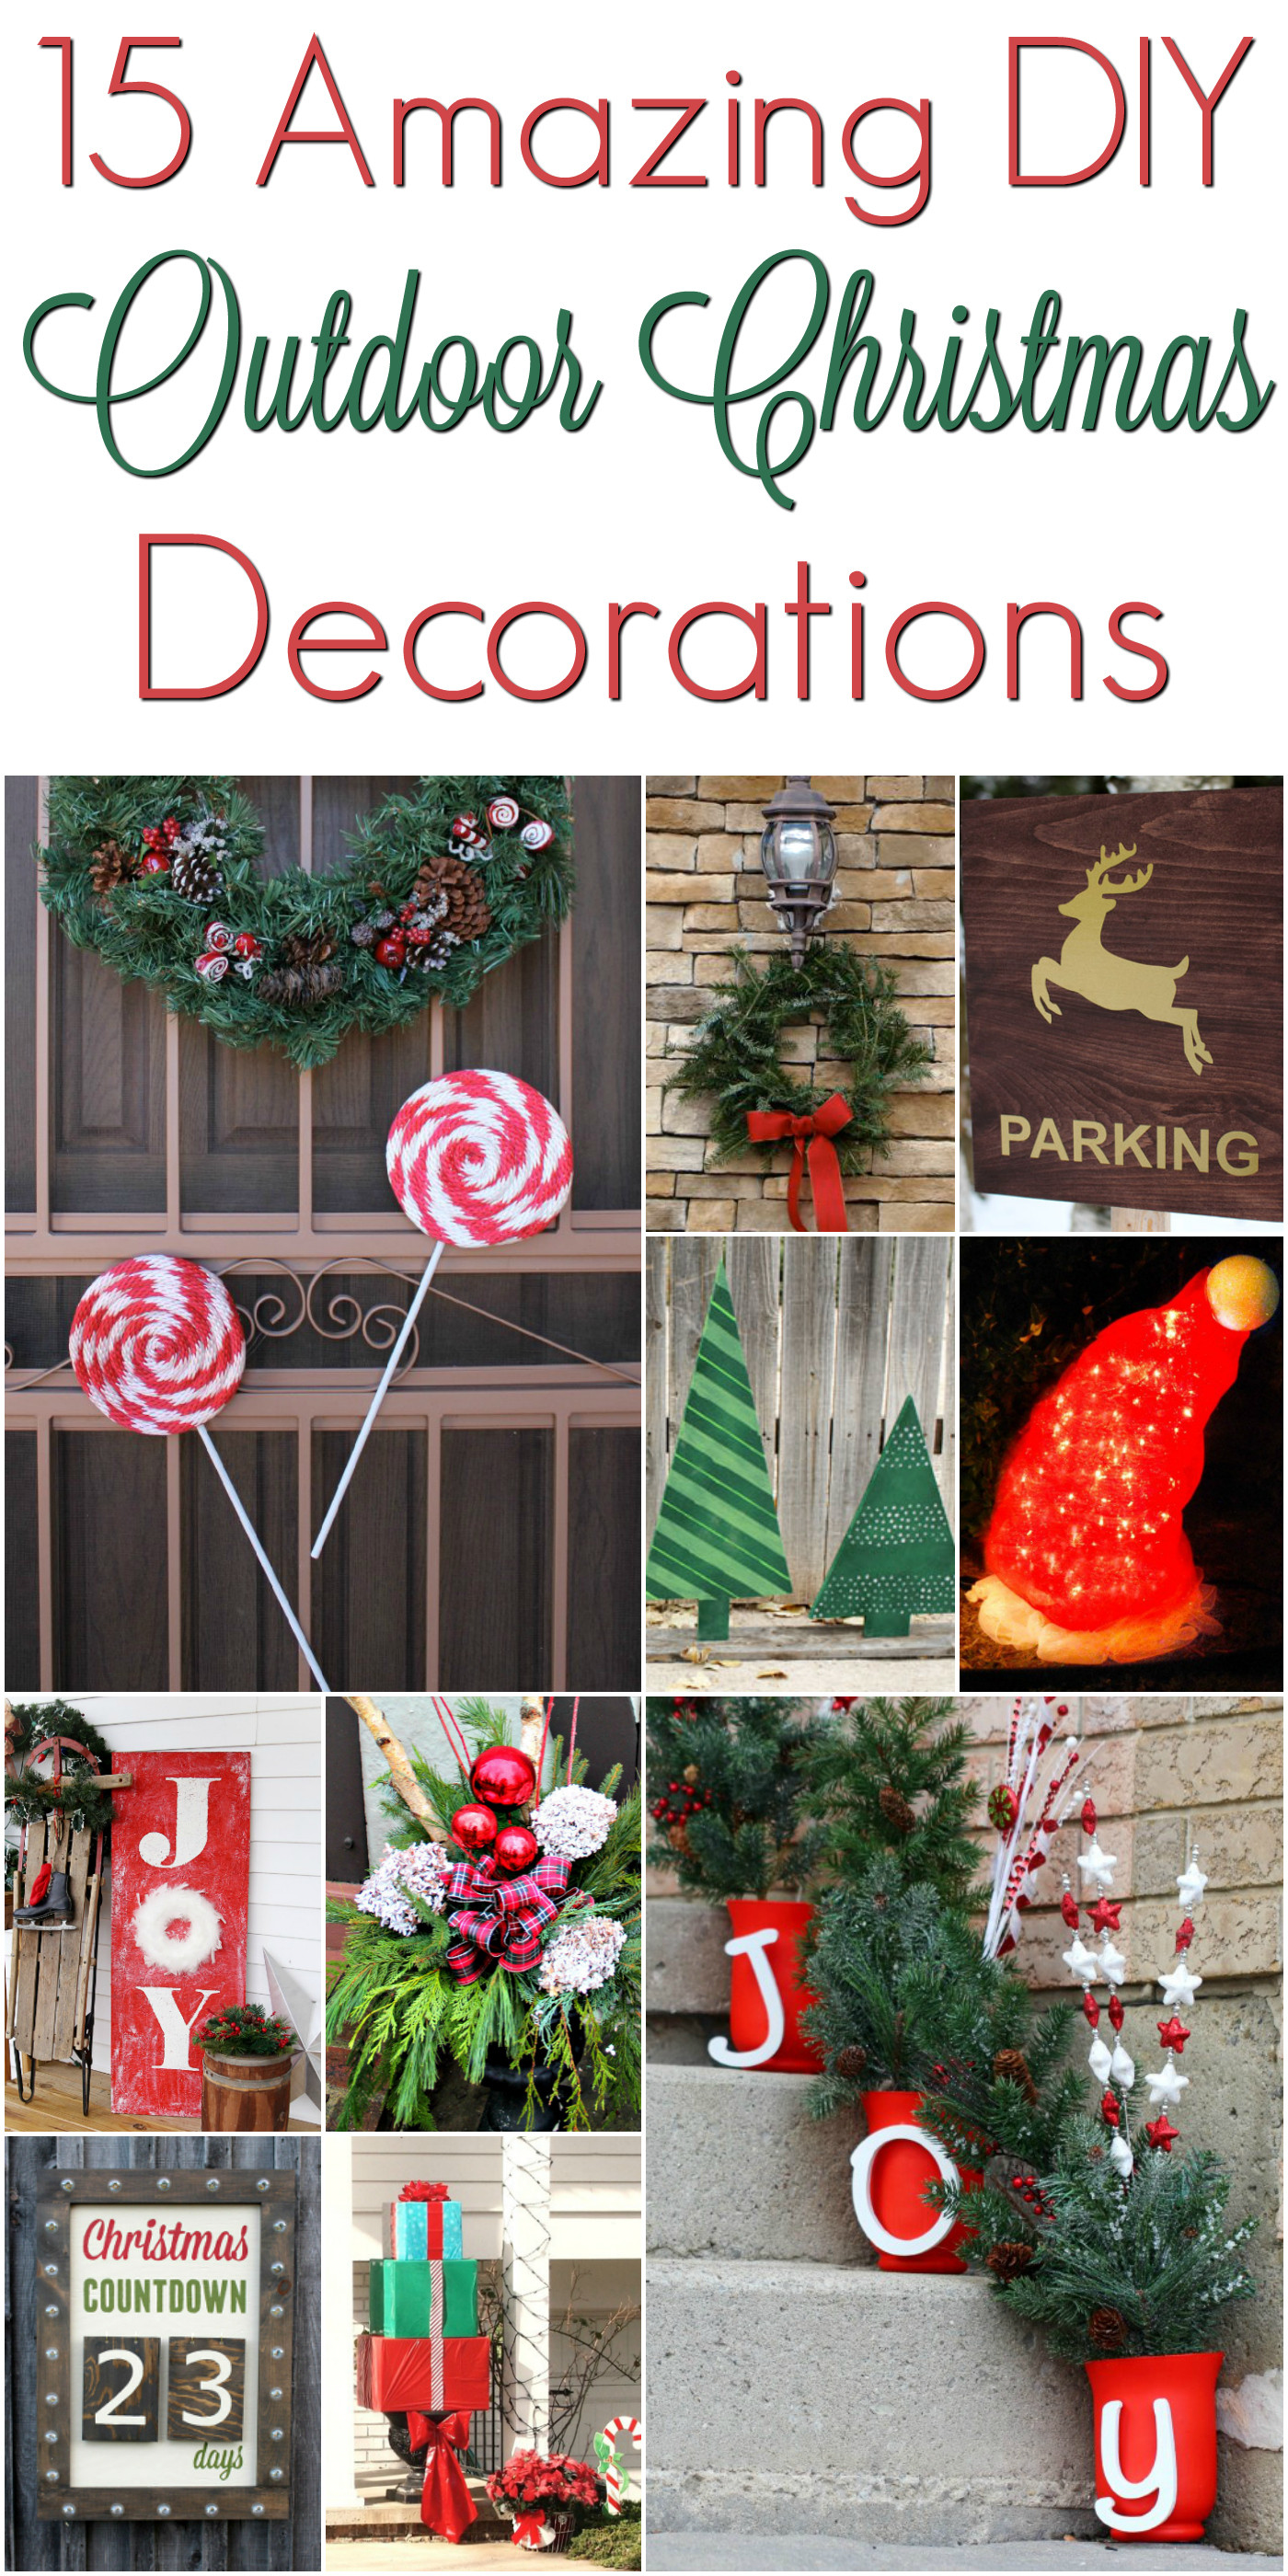 DIY Christmas Yard Decor
 DIY Christmas Outdoor Decorations ChristmasDecorations